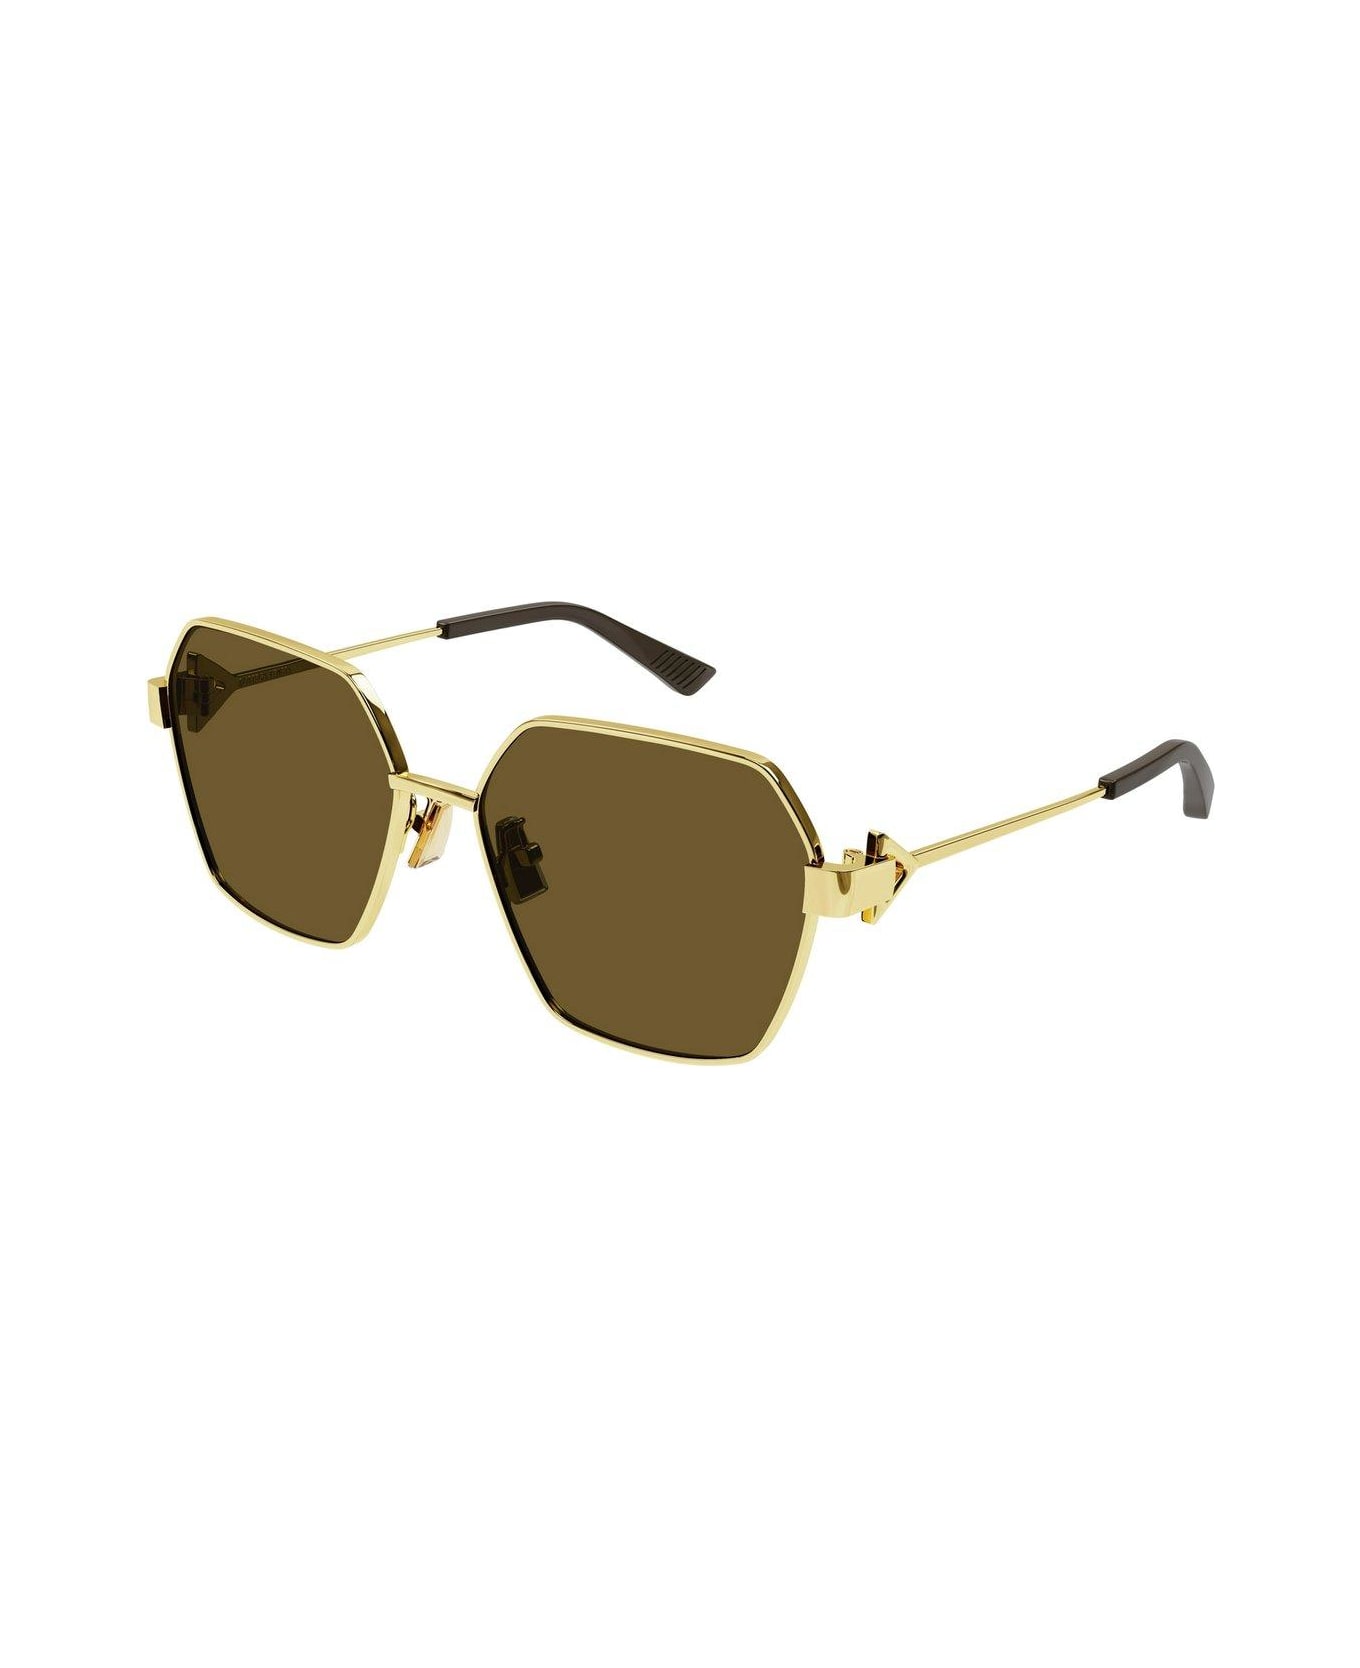 Bottega Veneta Eyewear Geometric Frame Sunglasses Sunglasses - 005 GOLD GOLD BROWN